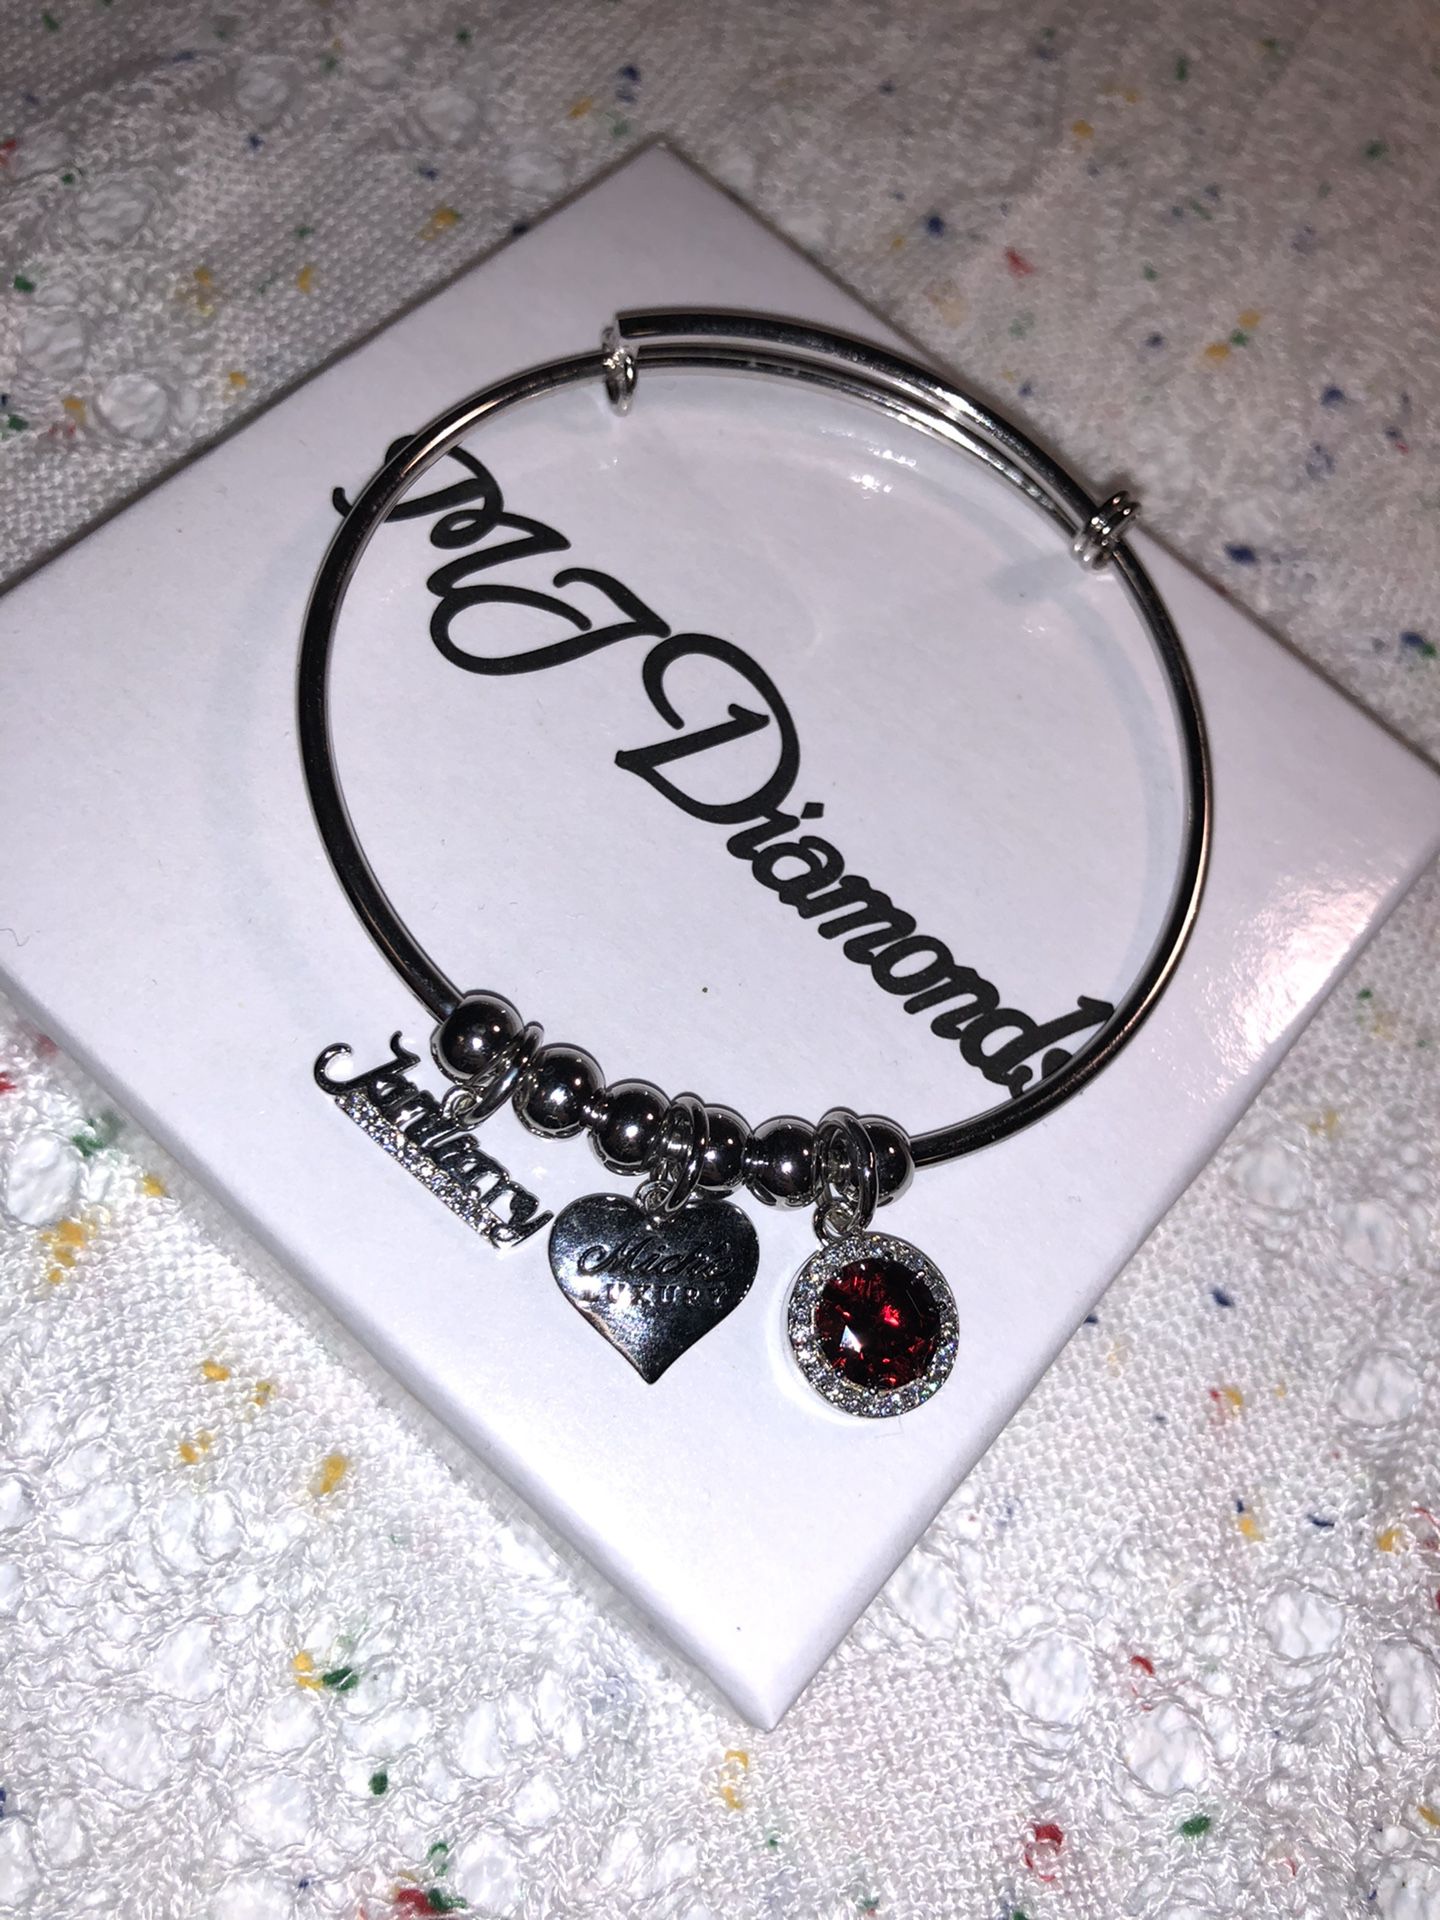 Fashionable Aquarius Birthstone Garnet Bracelet. Gift Included. Zodiac Sign Gift